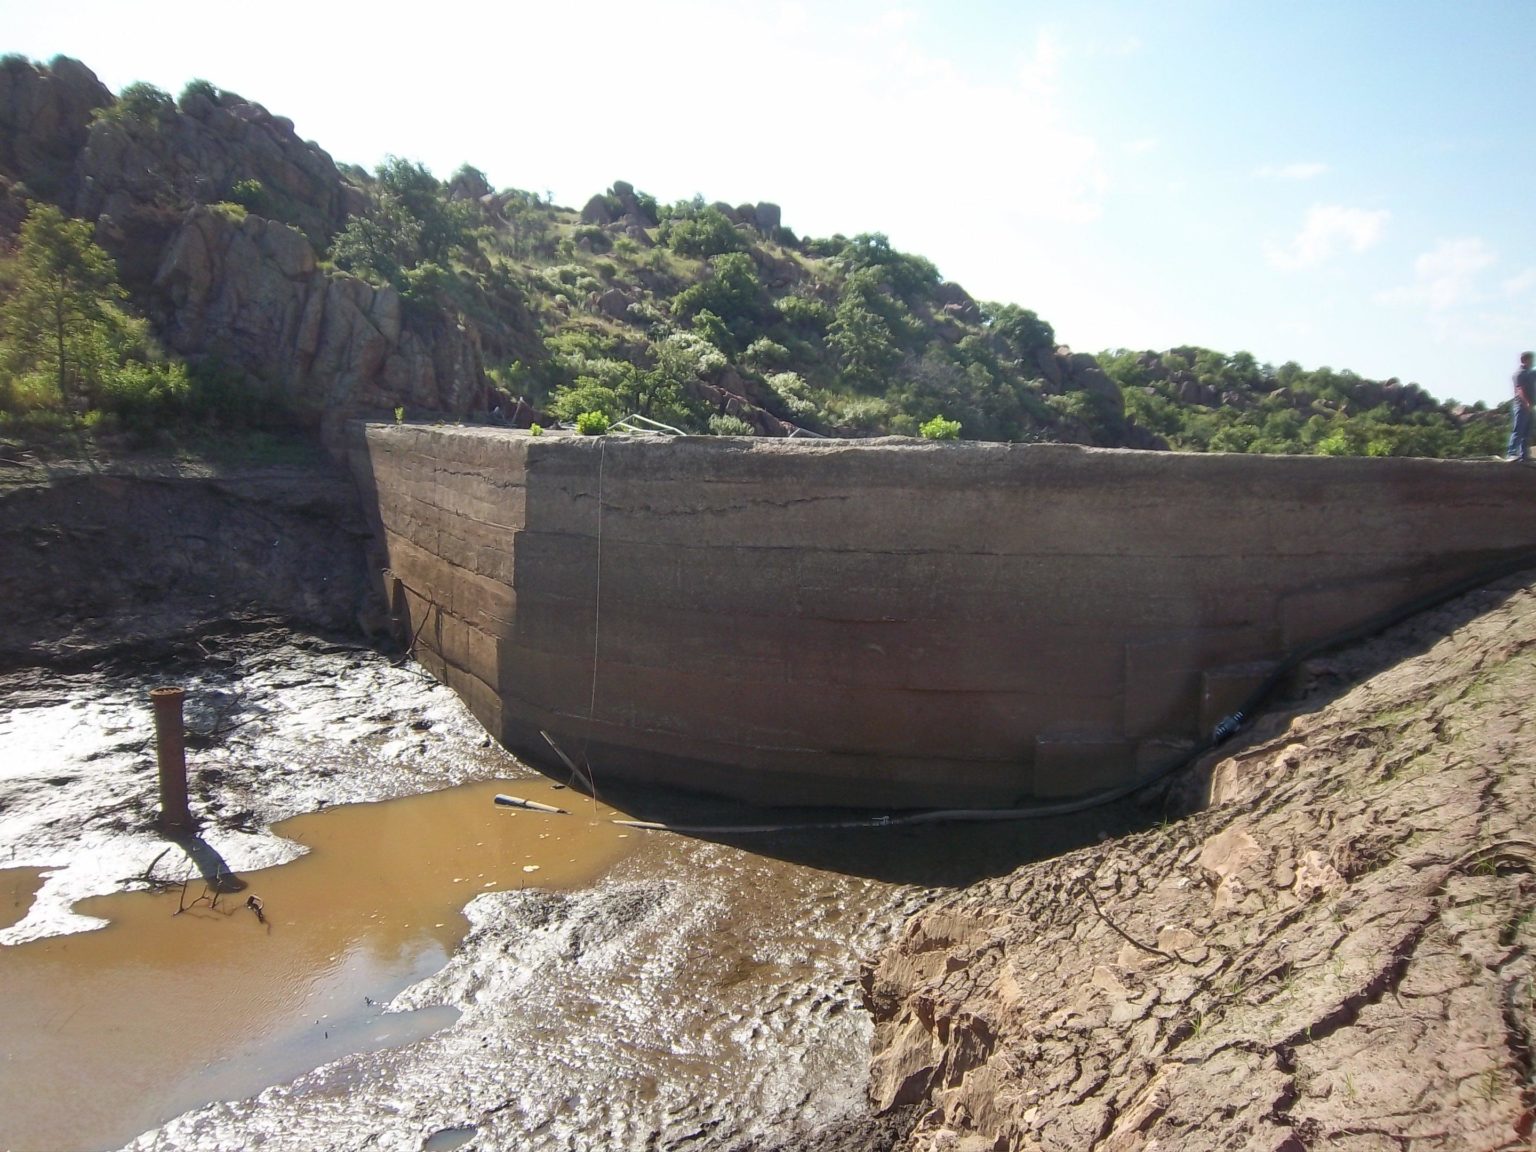 Dam Assessment & Soil Erosion Monitoring At Fort Sill, Oklahoma